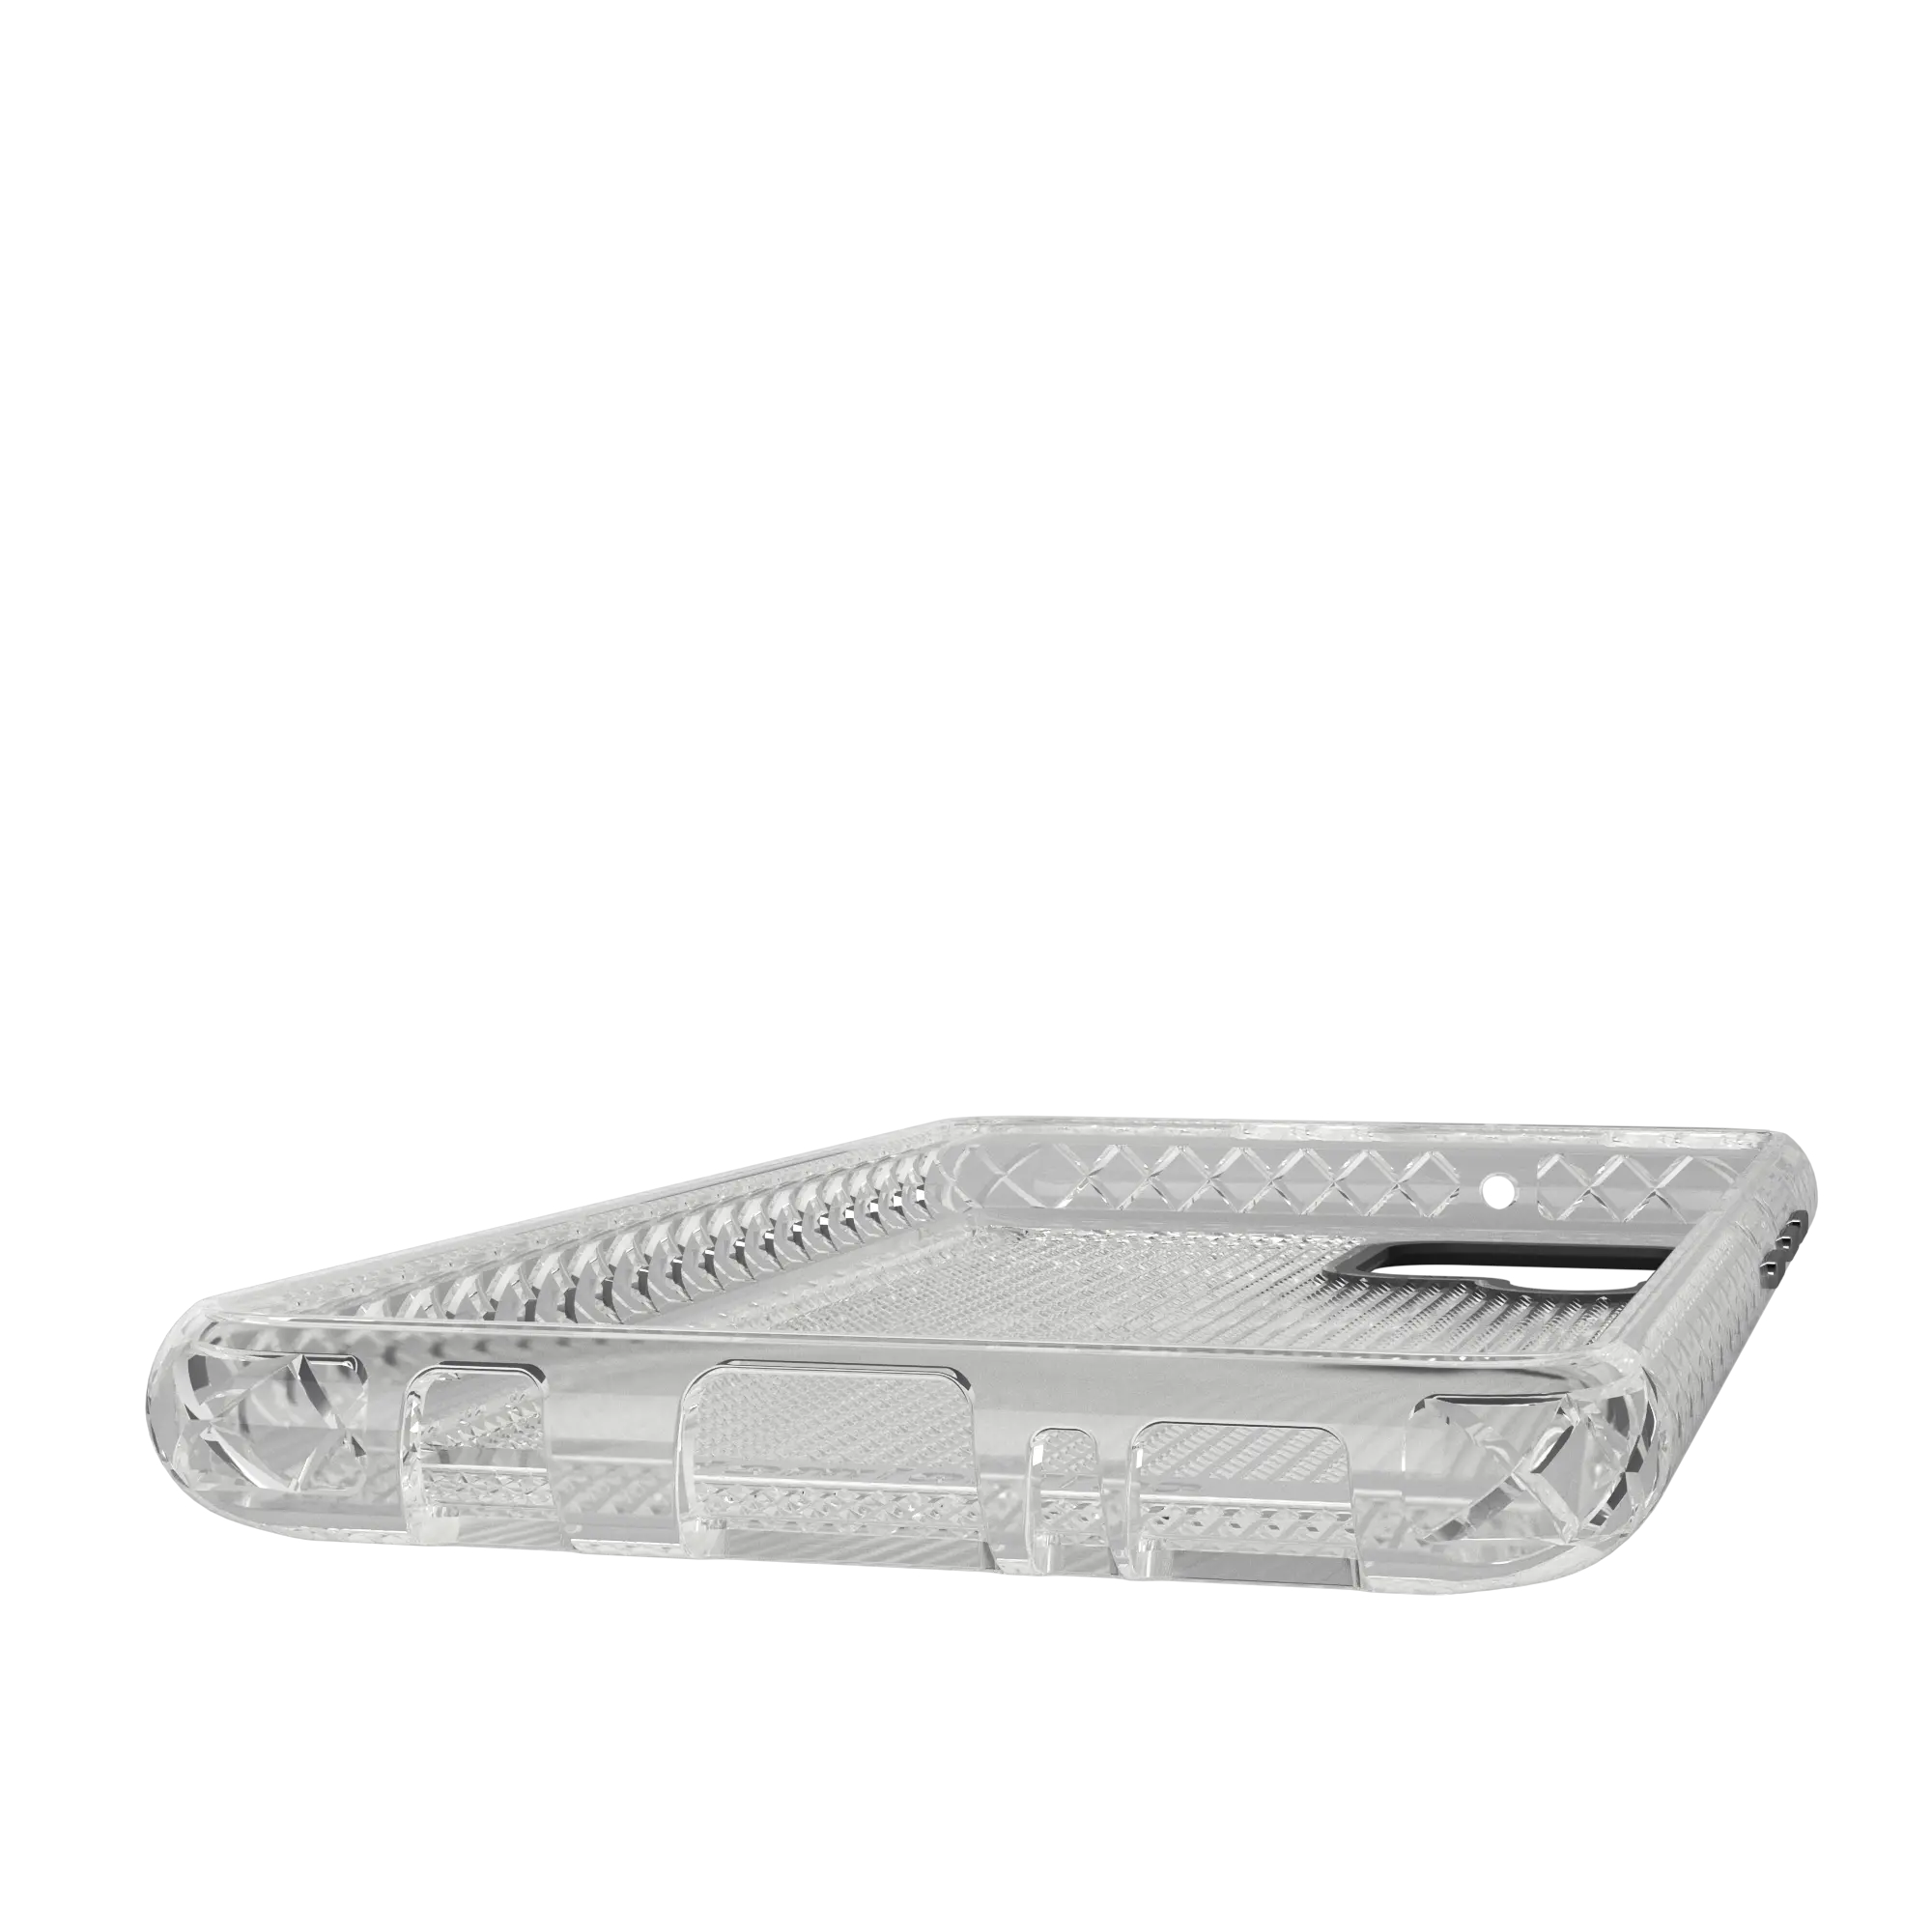 Altitude X Series for Samsung Galaxy A42 5G  - Clear - Case -  - cellhelmet